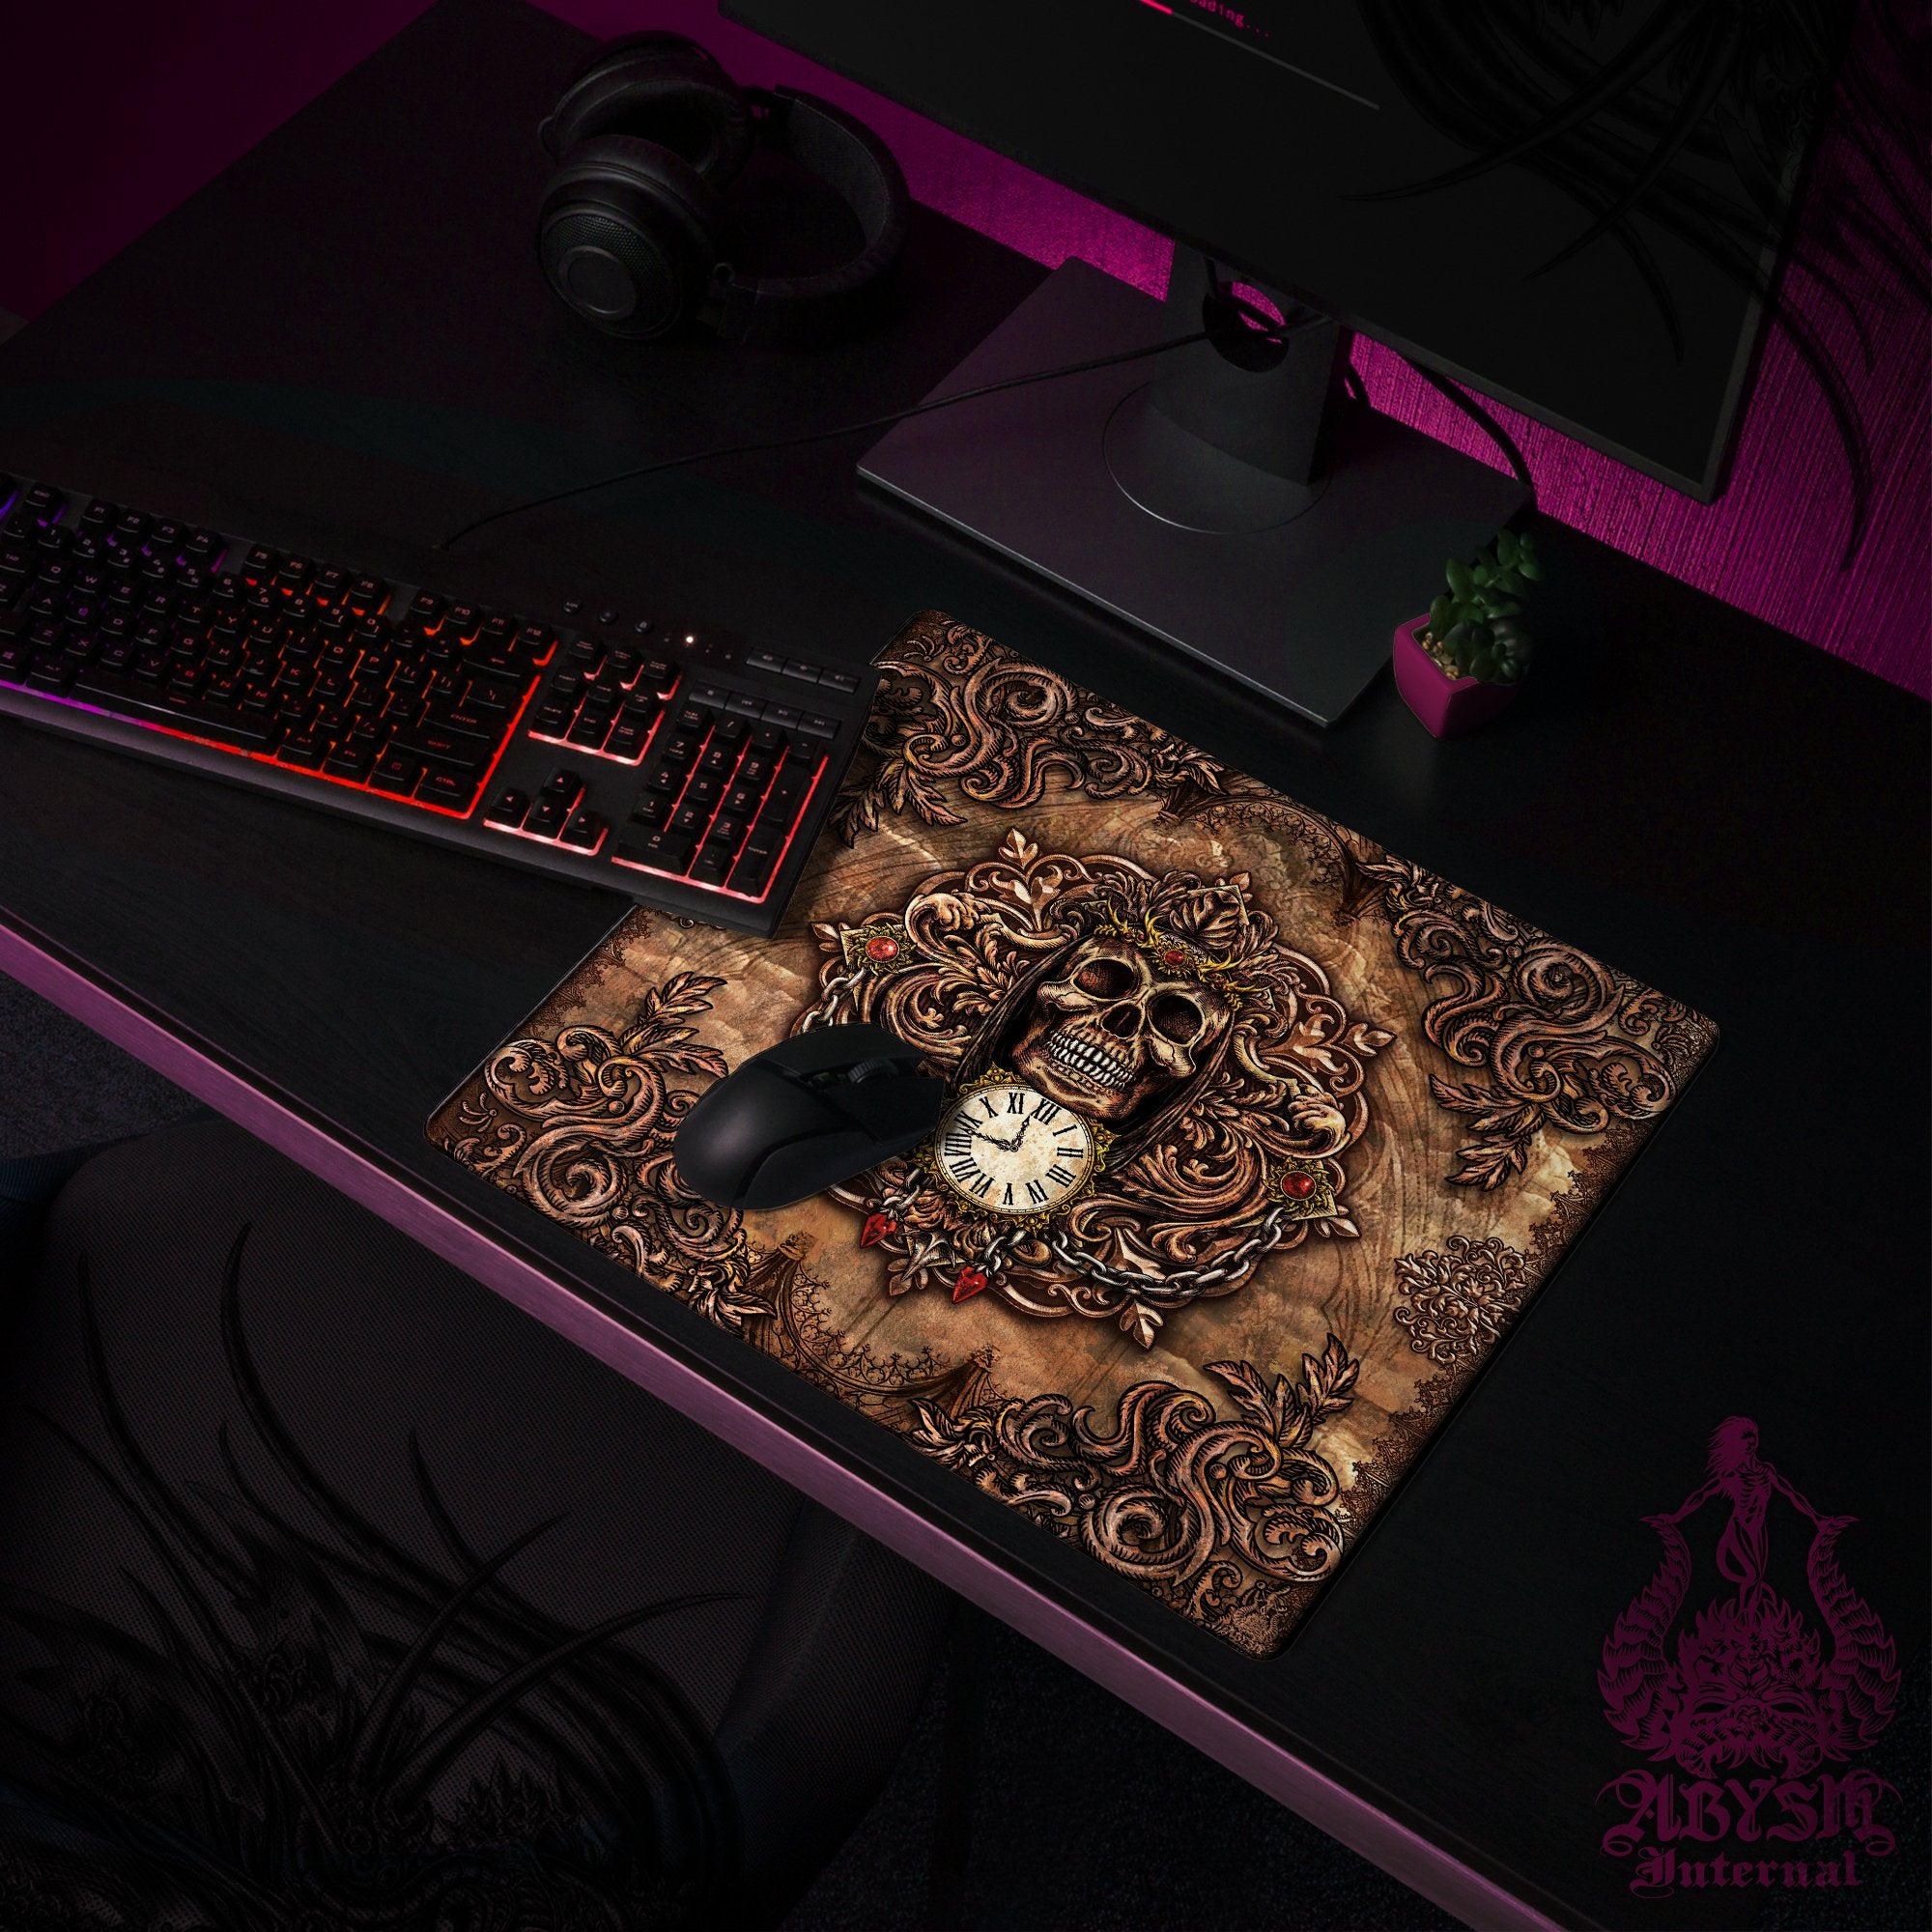 Gothic Gaming Mouse Pad, Grim Reaper Skull Desk Mat, Goth Table Protector Cover, Memento Mori Workpad, Dark Fantasy Art Print - 3 Colors - Abysm Internal